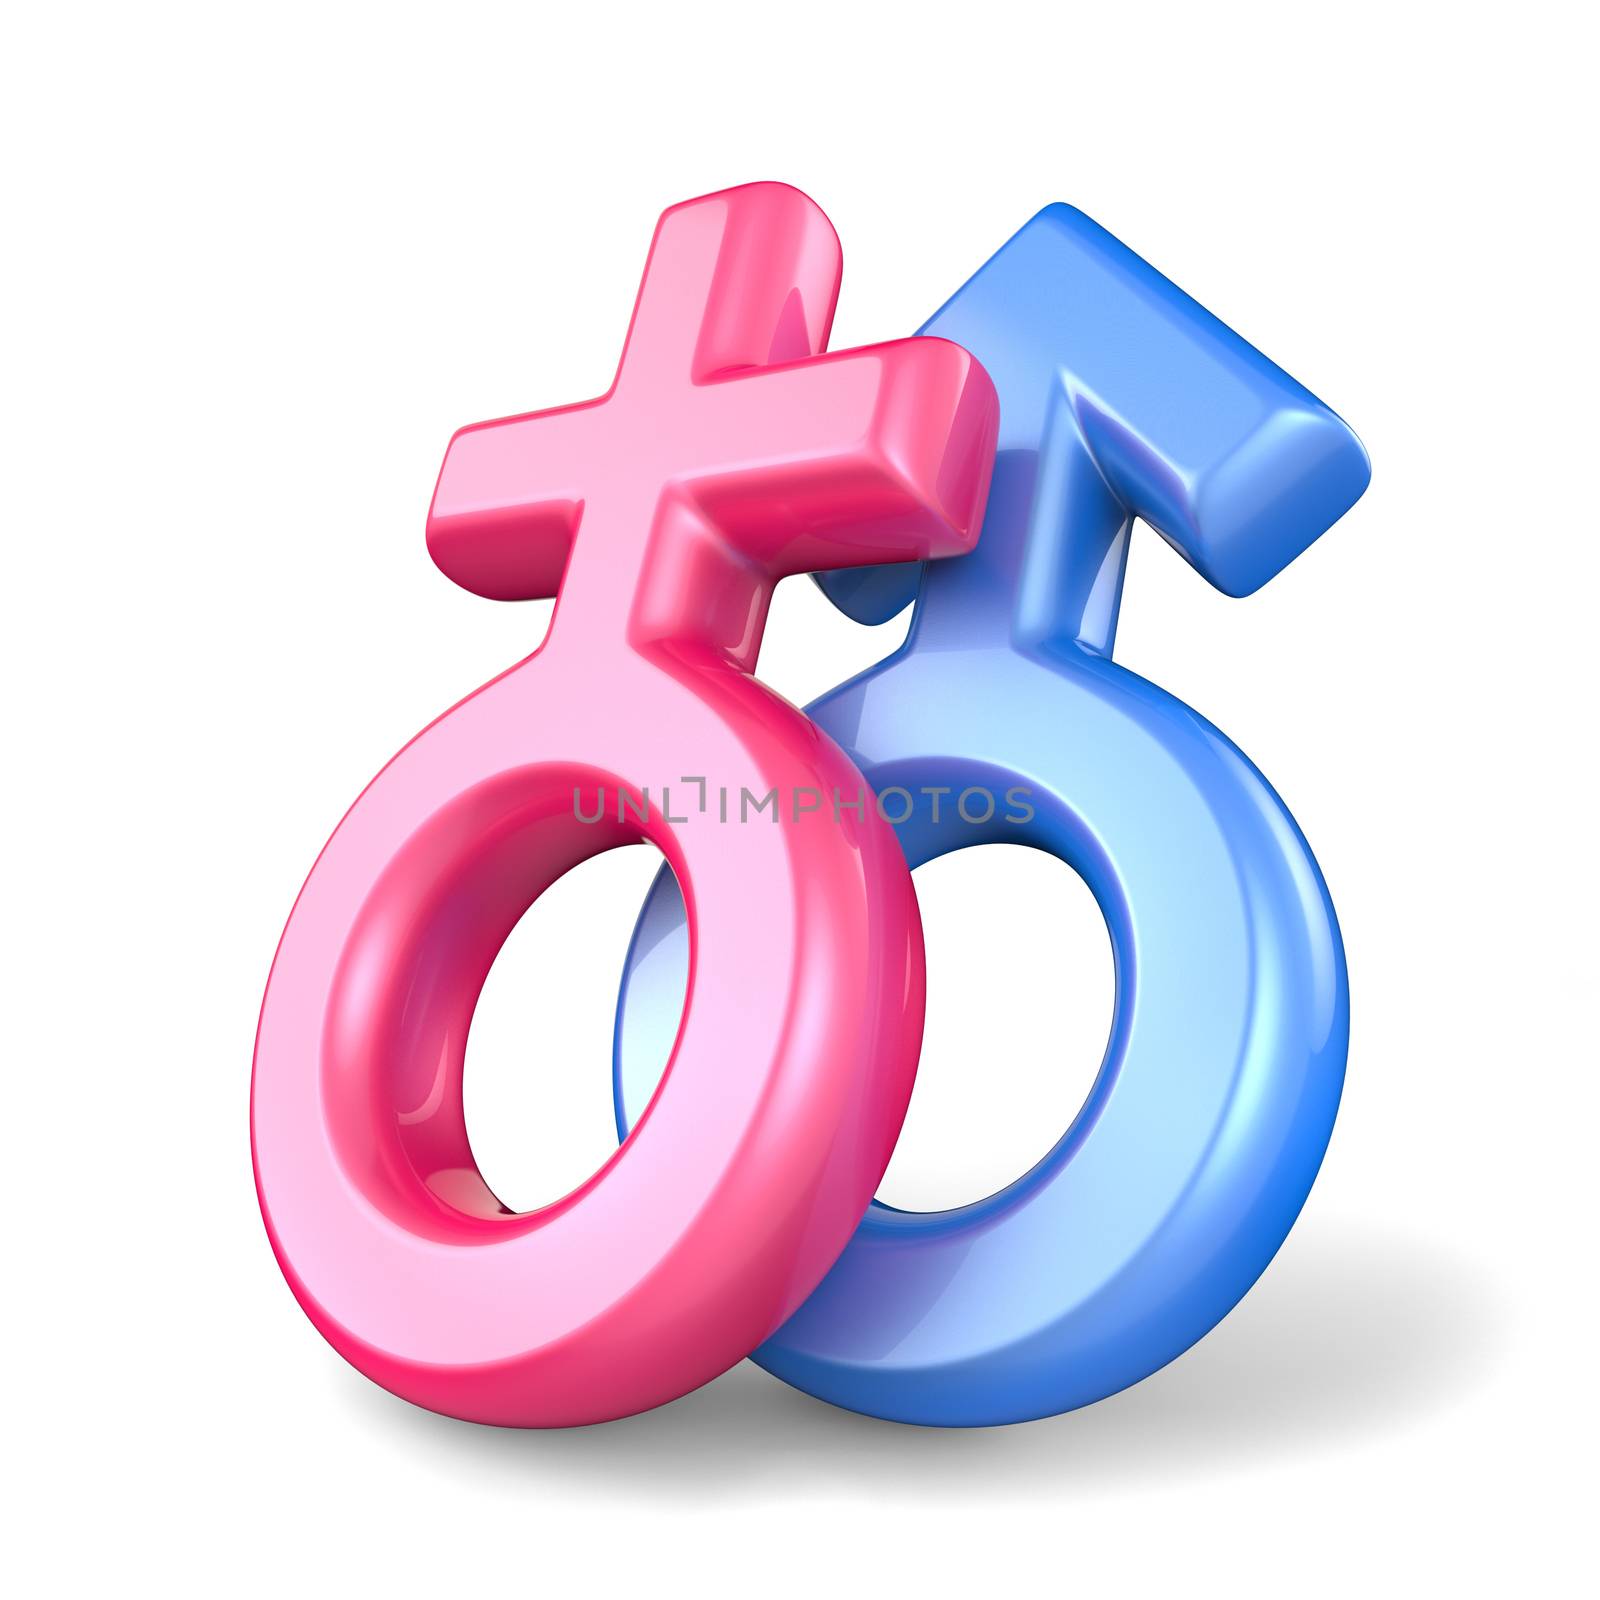 Pink female and blue male sex symbols. Mars and Venus symbols. 3 by djmilic